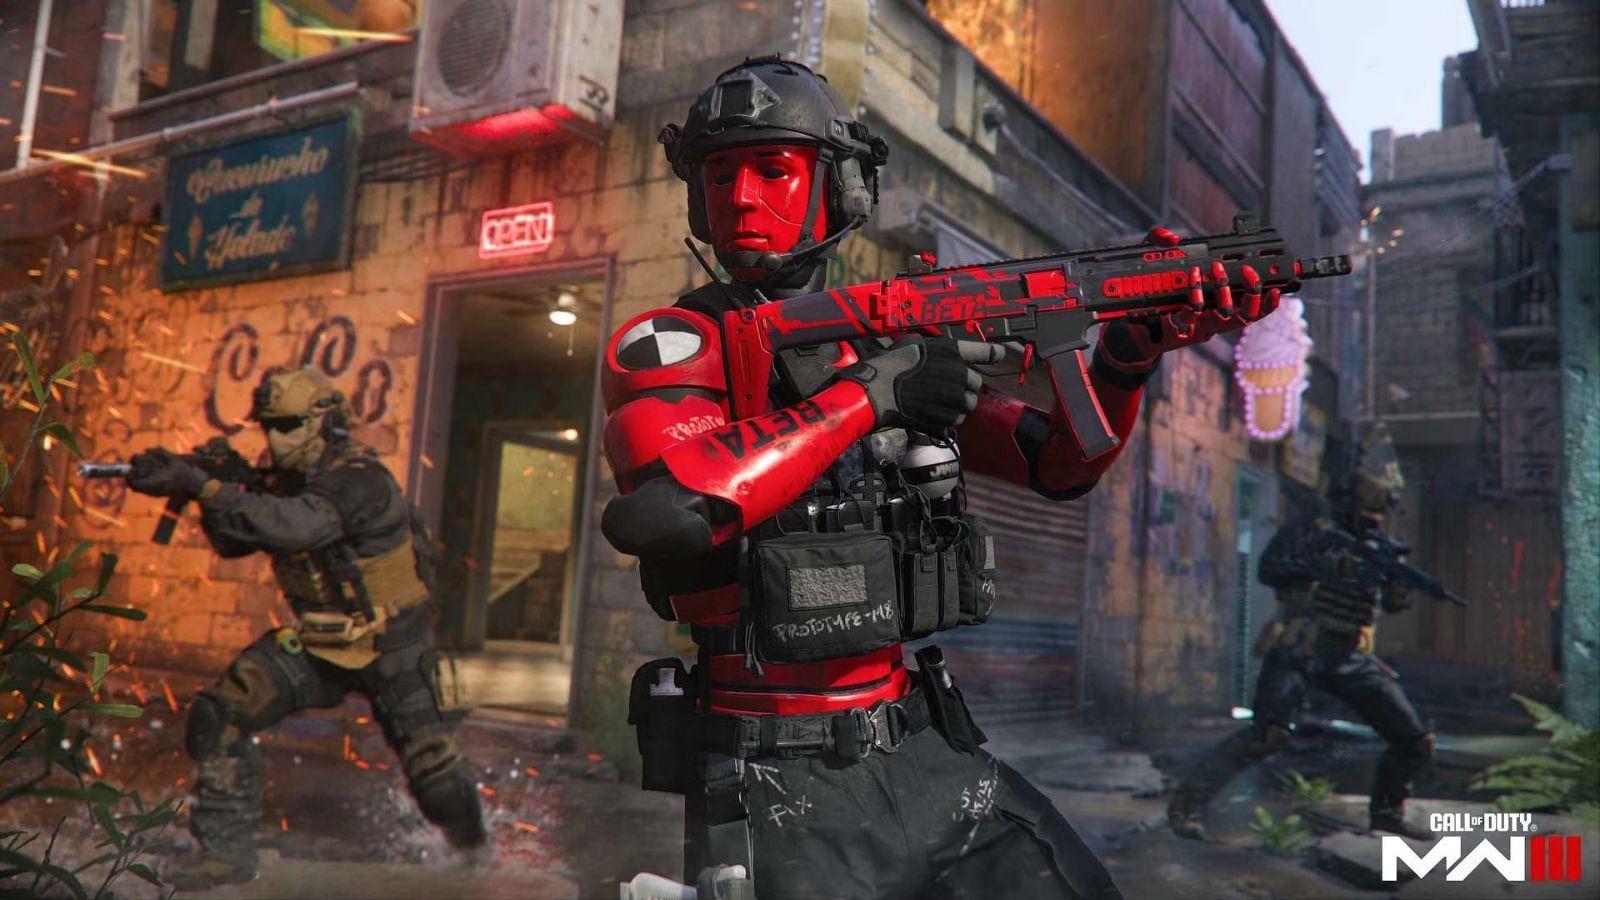 How to get Modern Warfare 2 beta rewards: Operator skin, Weapon